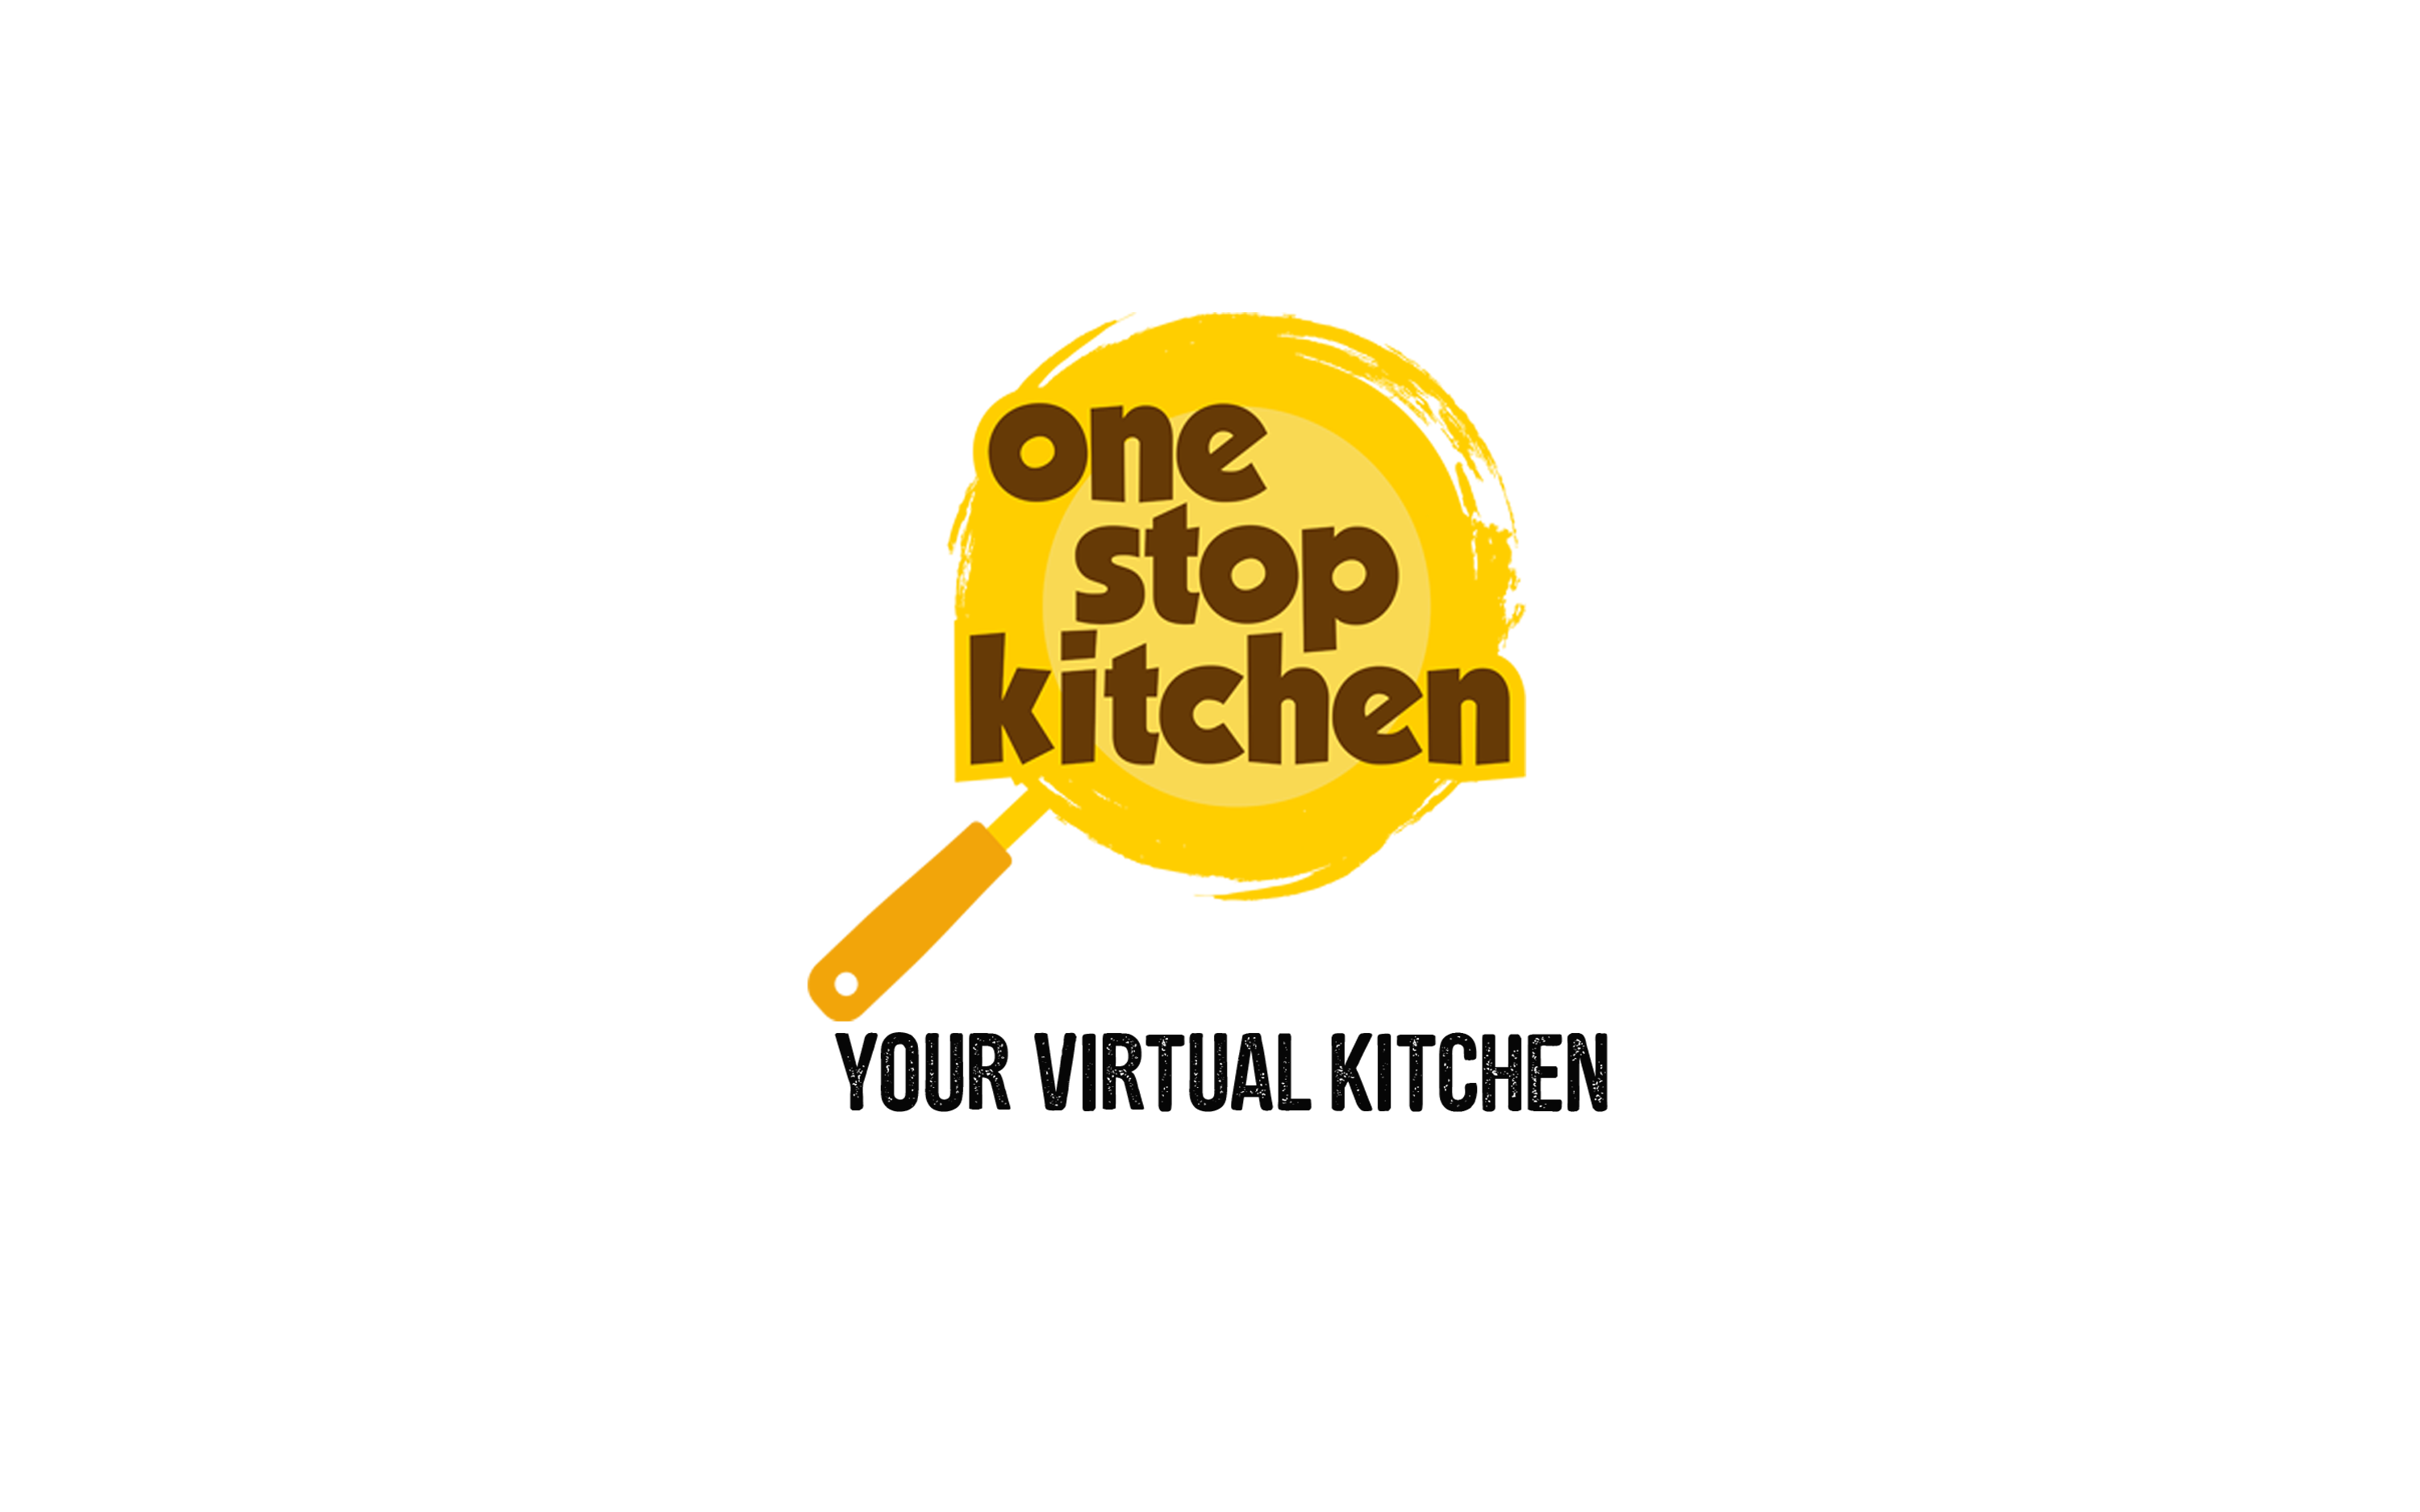 One Stop Kitchen